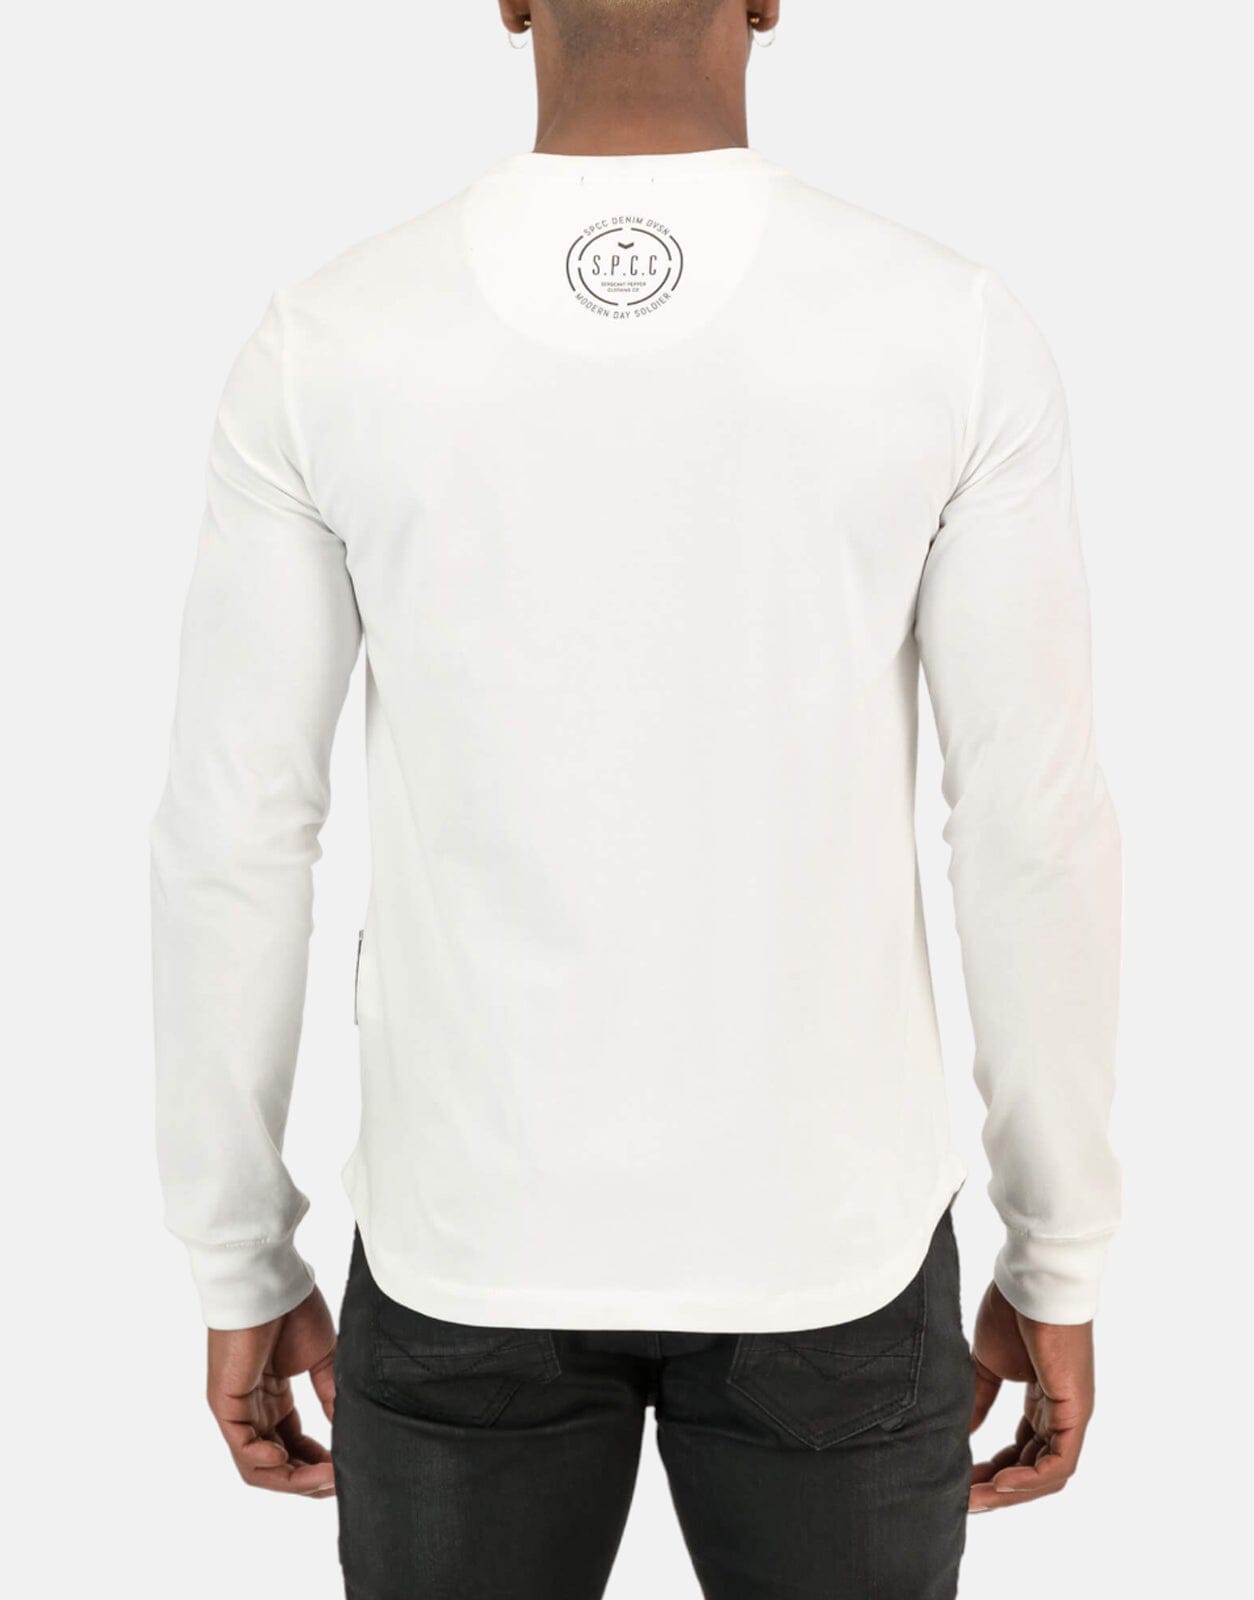 SPCC Campion White Long Sleeve T-Shirt - Subwear